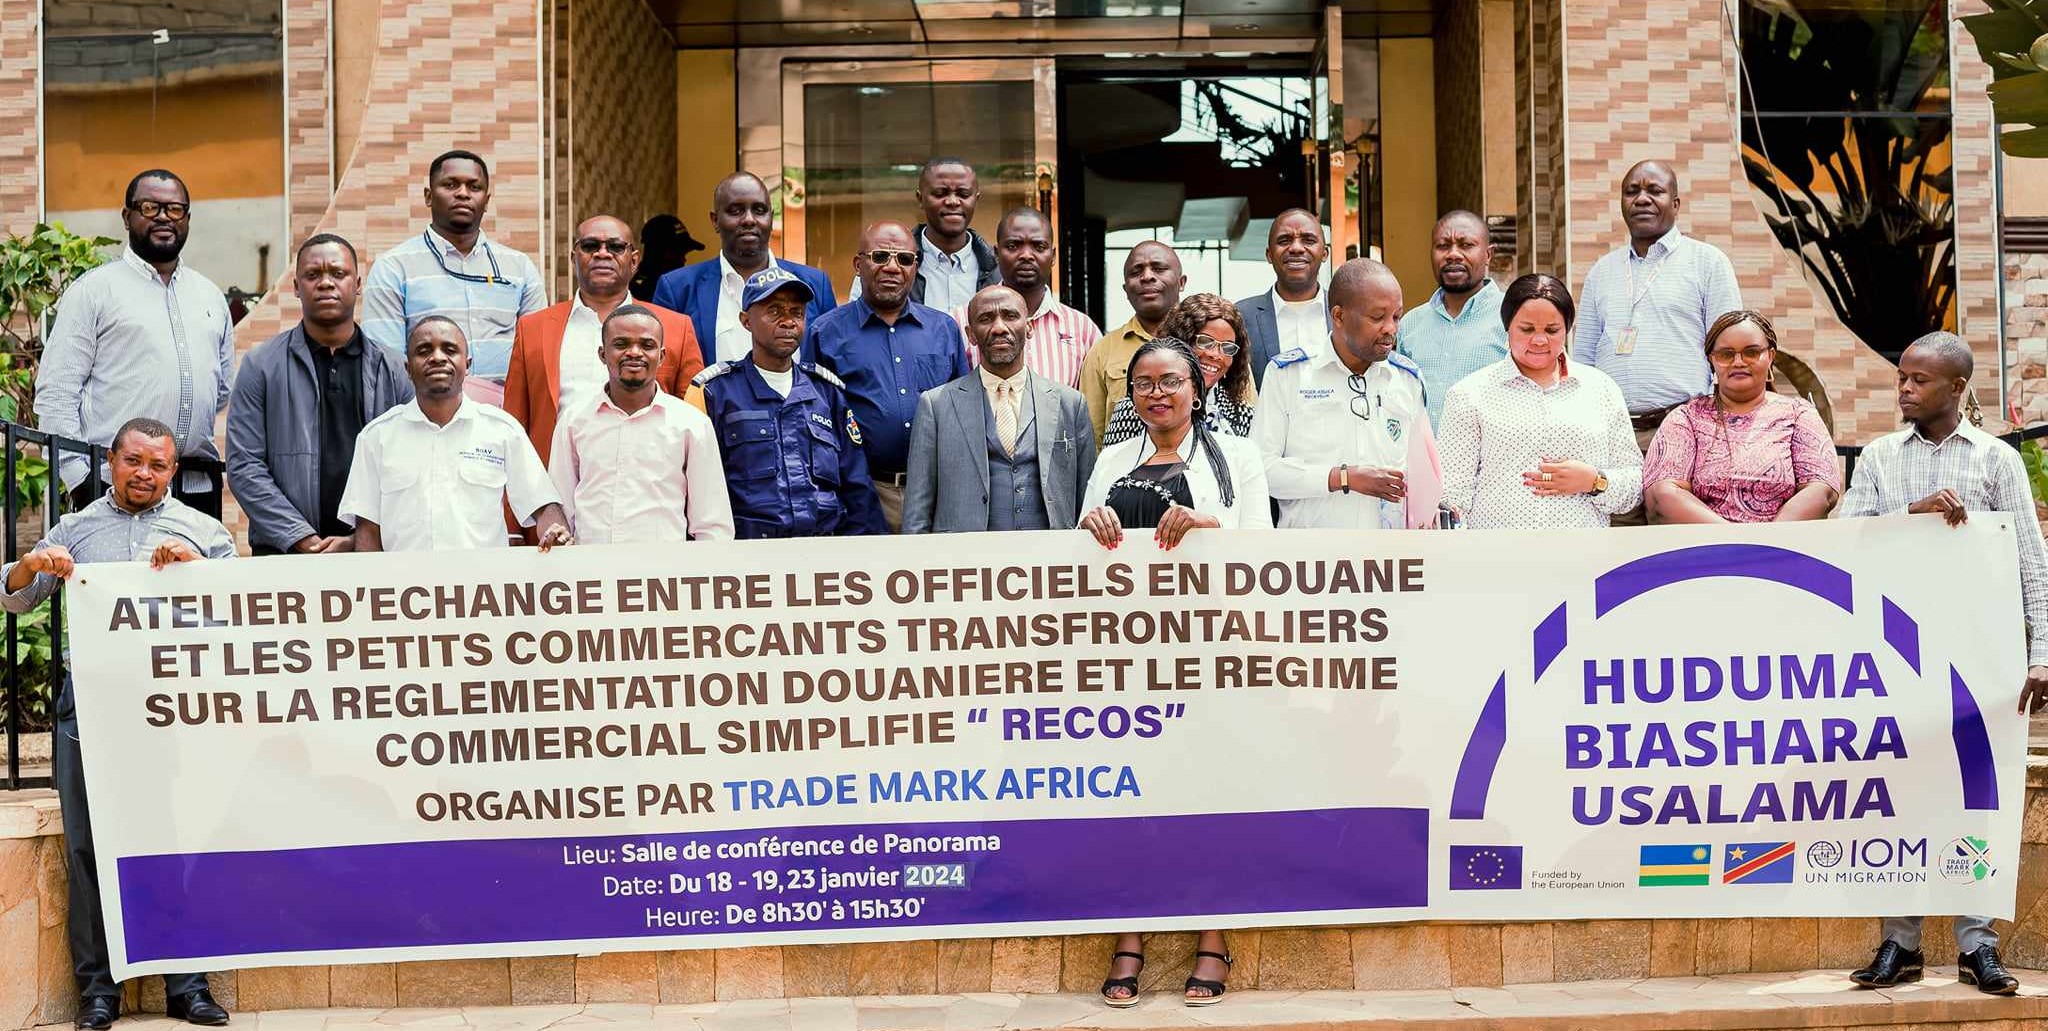 RECOS - trade Mark africa